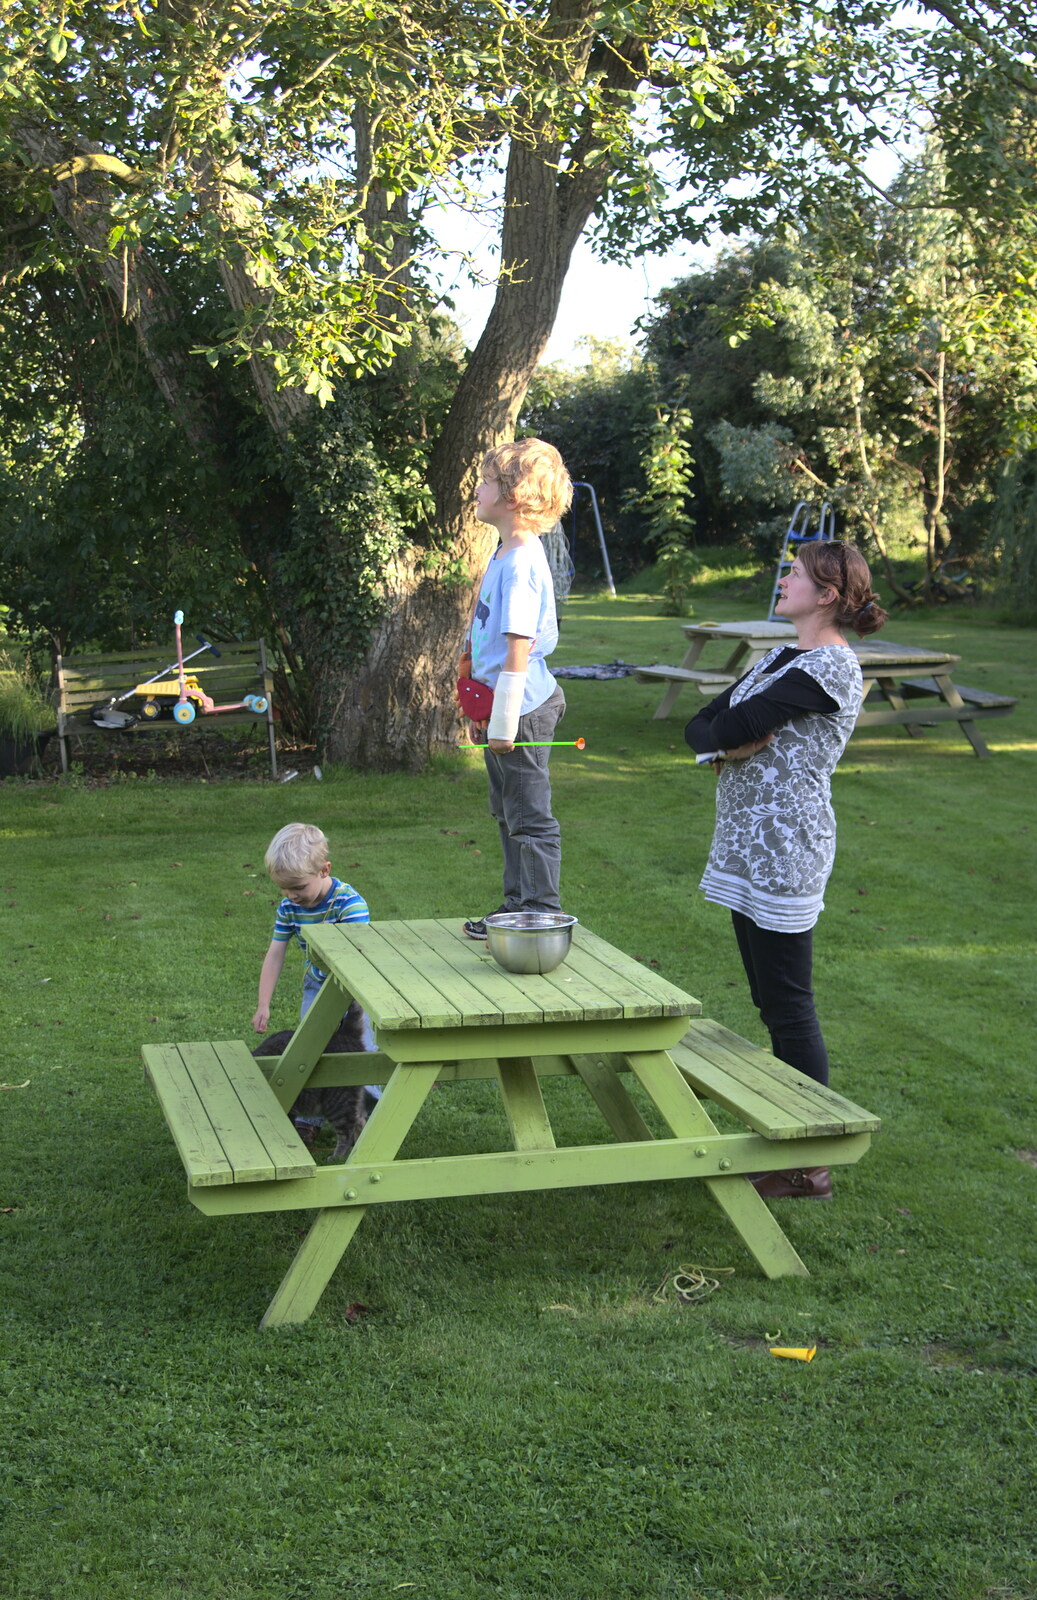 Fred's on a table in the garden from A 1940s Dance, Bressingham Steam Museum, Bressingham, Norfolk - 19th September 2015